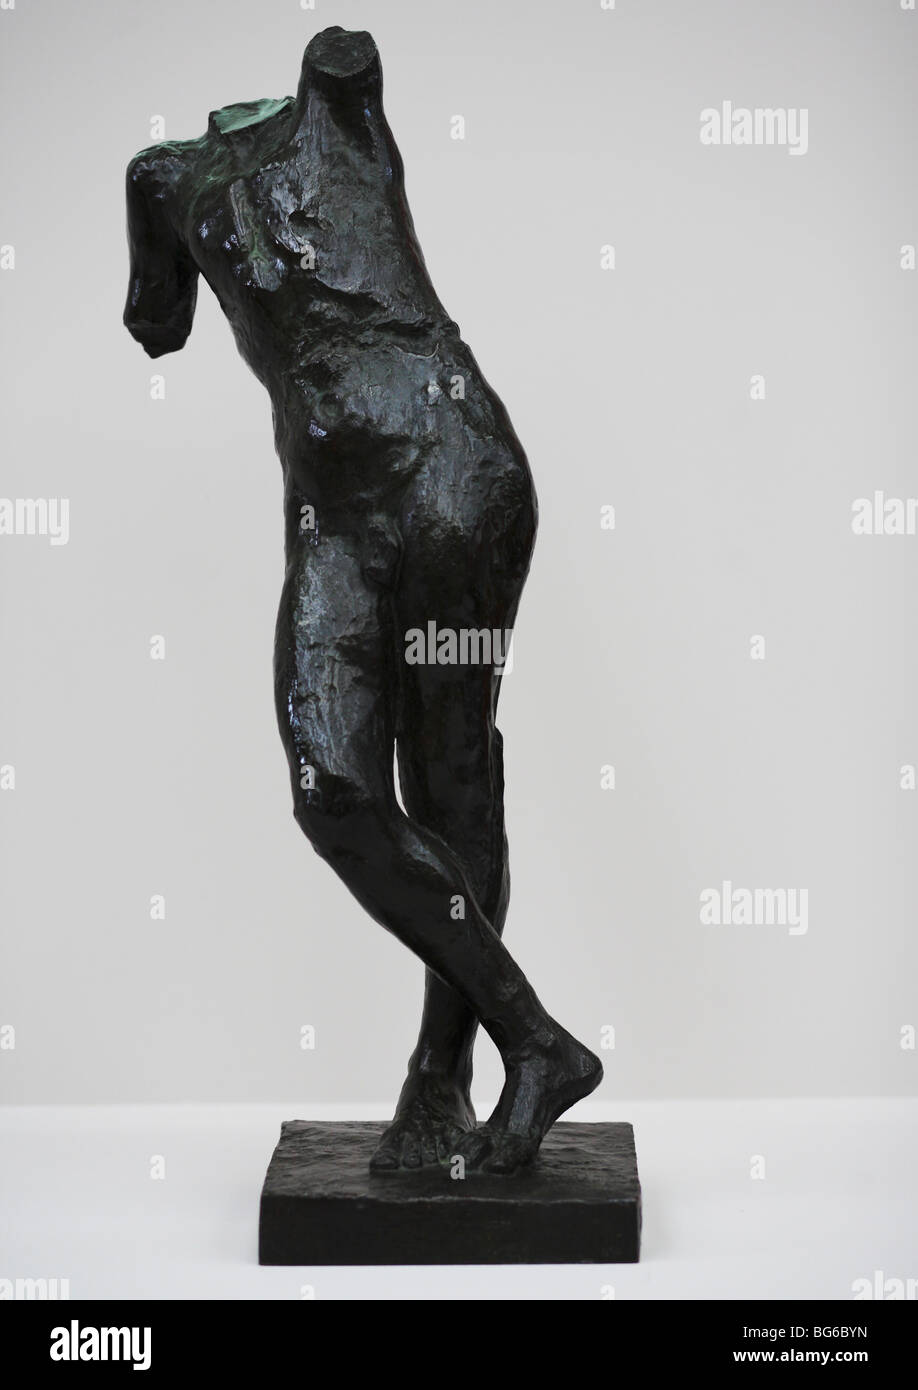 Auguste Rodin, The Age of Bronze (L'Age d'airain), French